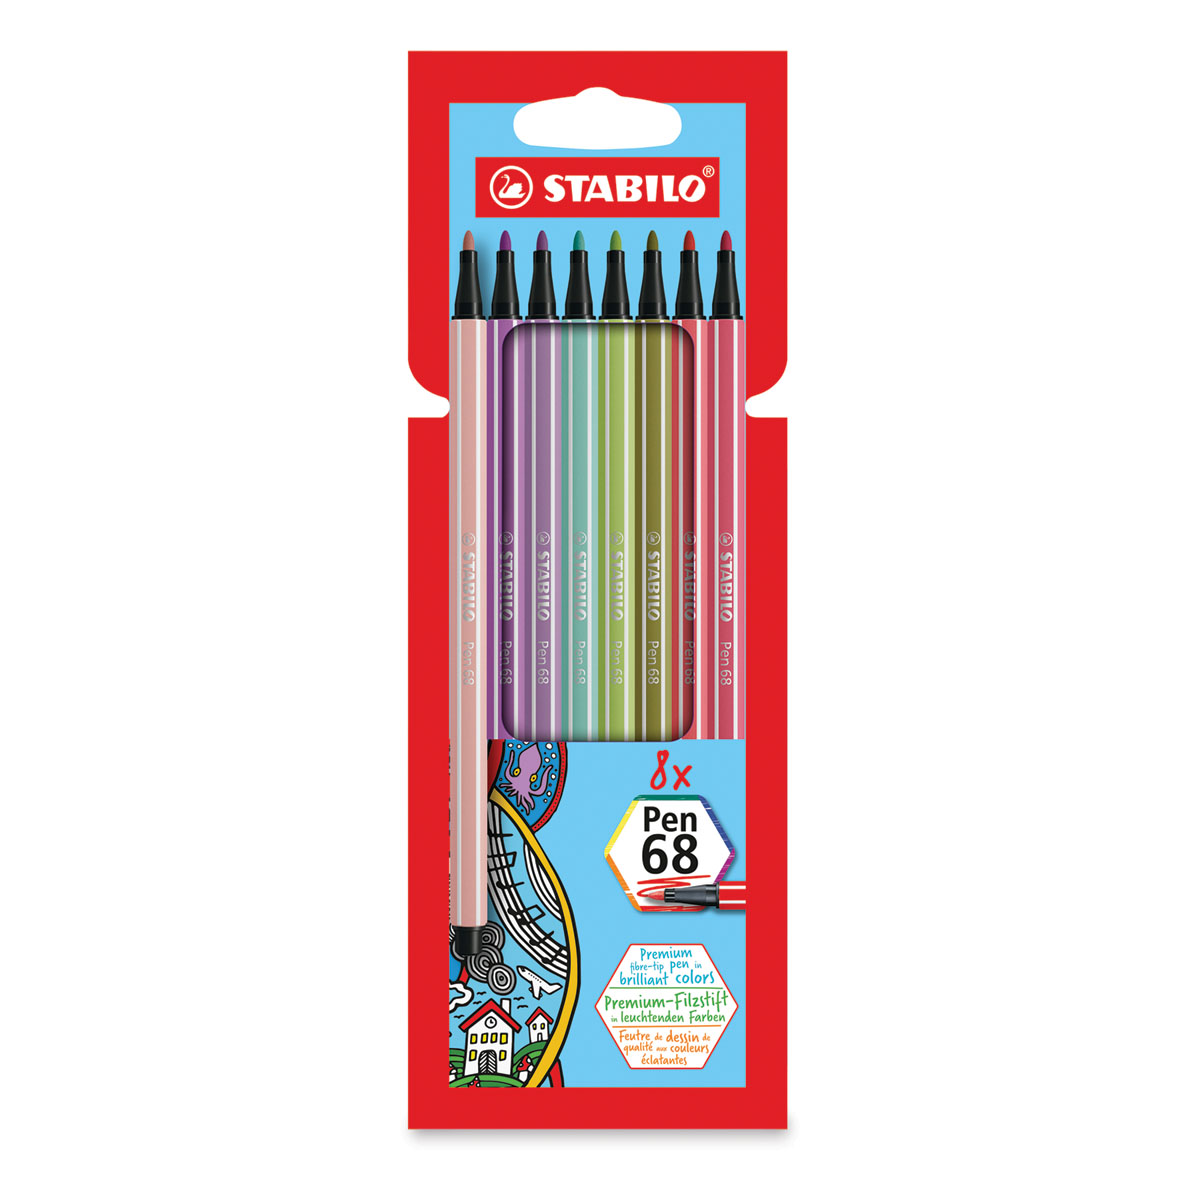 STABILO Pen 68 Fibre Tip Brush Pen - ARTY - Wallet of 10